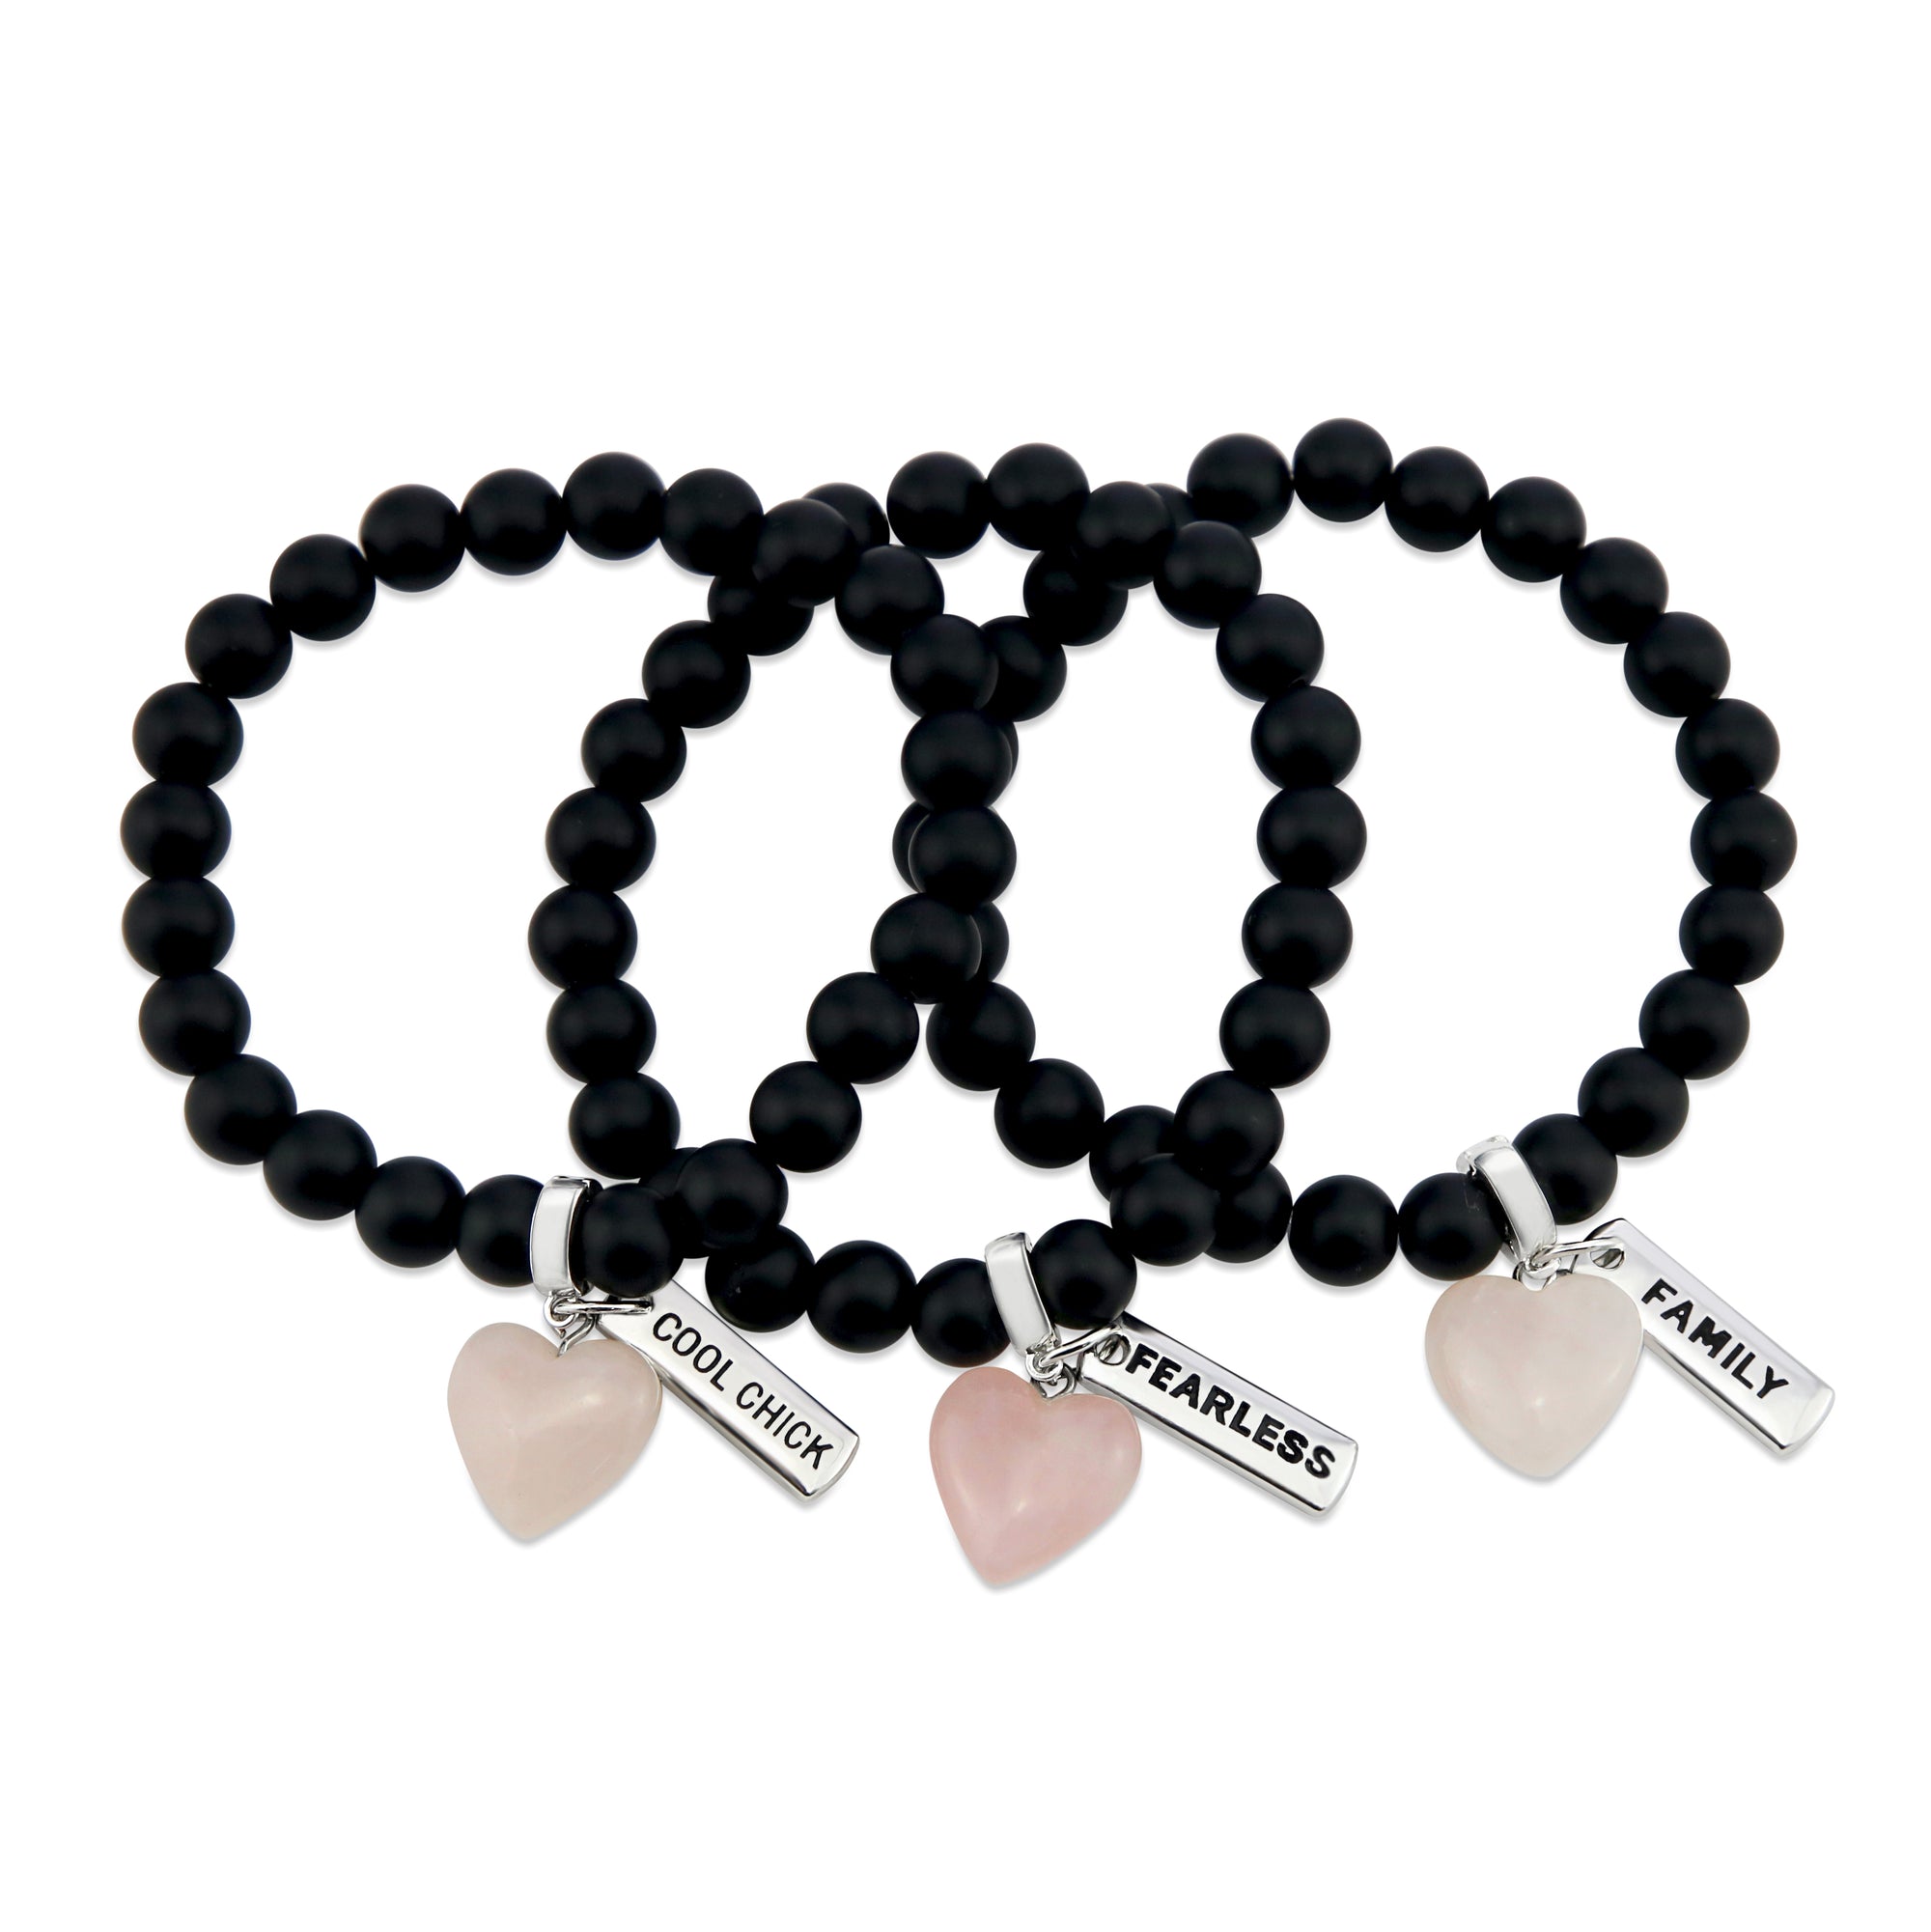 Matt black onyx stone bead bracelet with rose quart6z stone heart pendnat charm and silver inspiring word charms. 